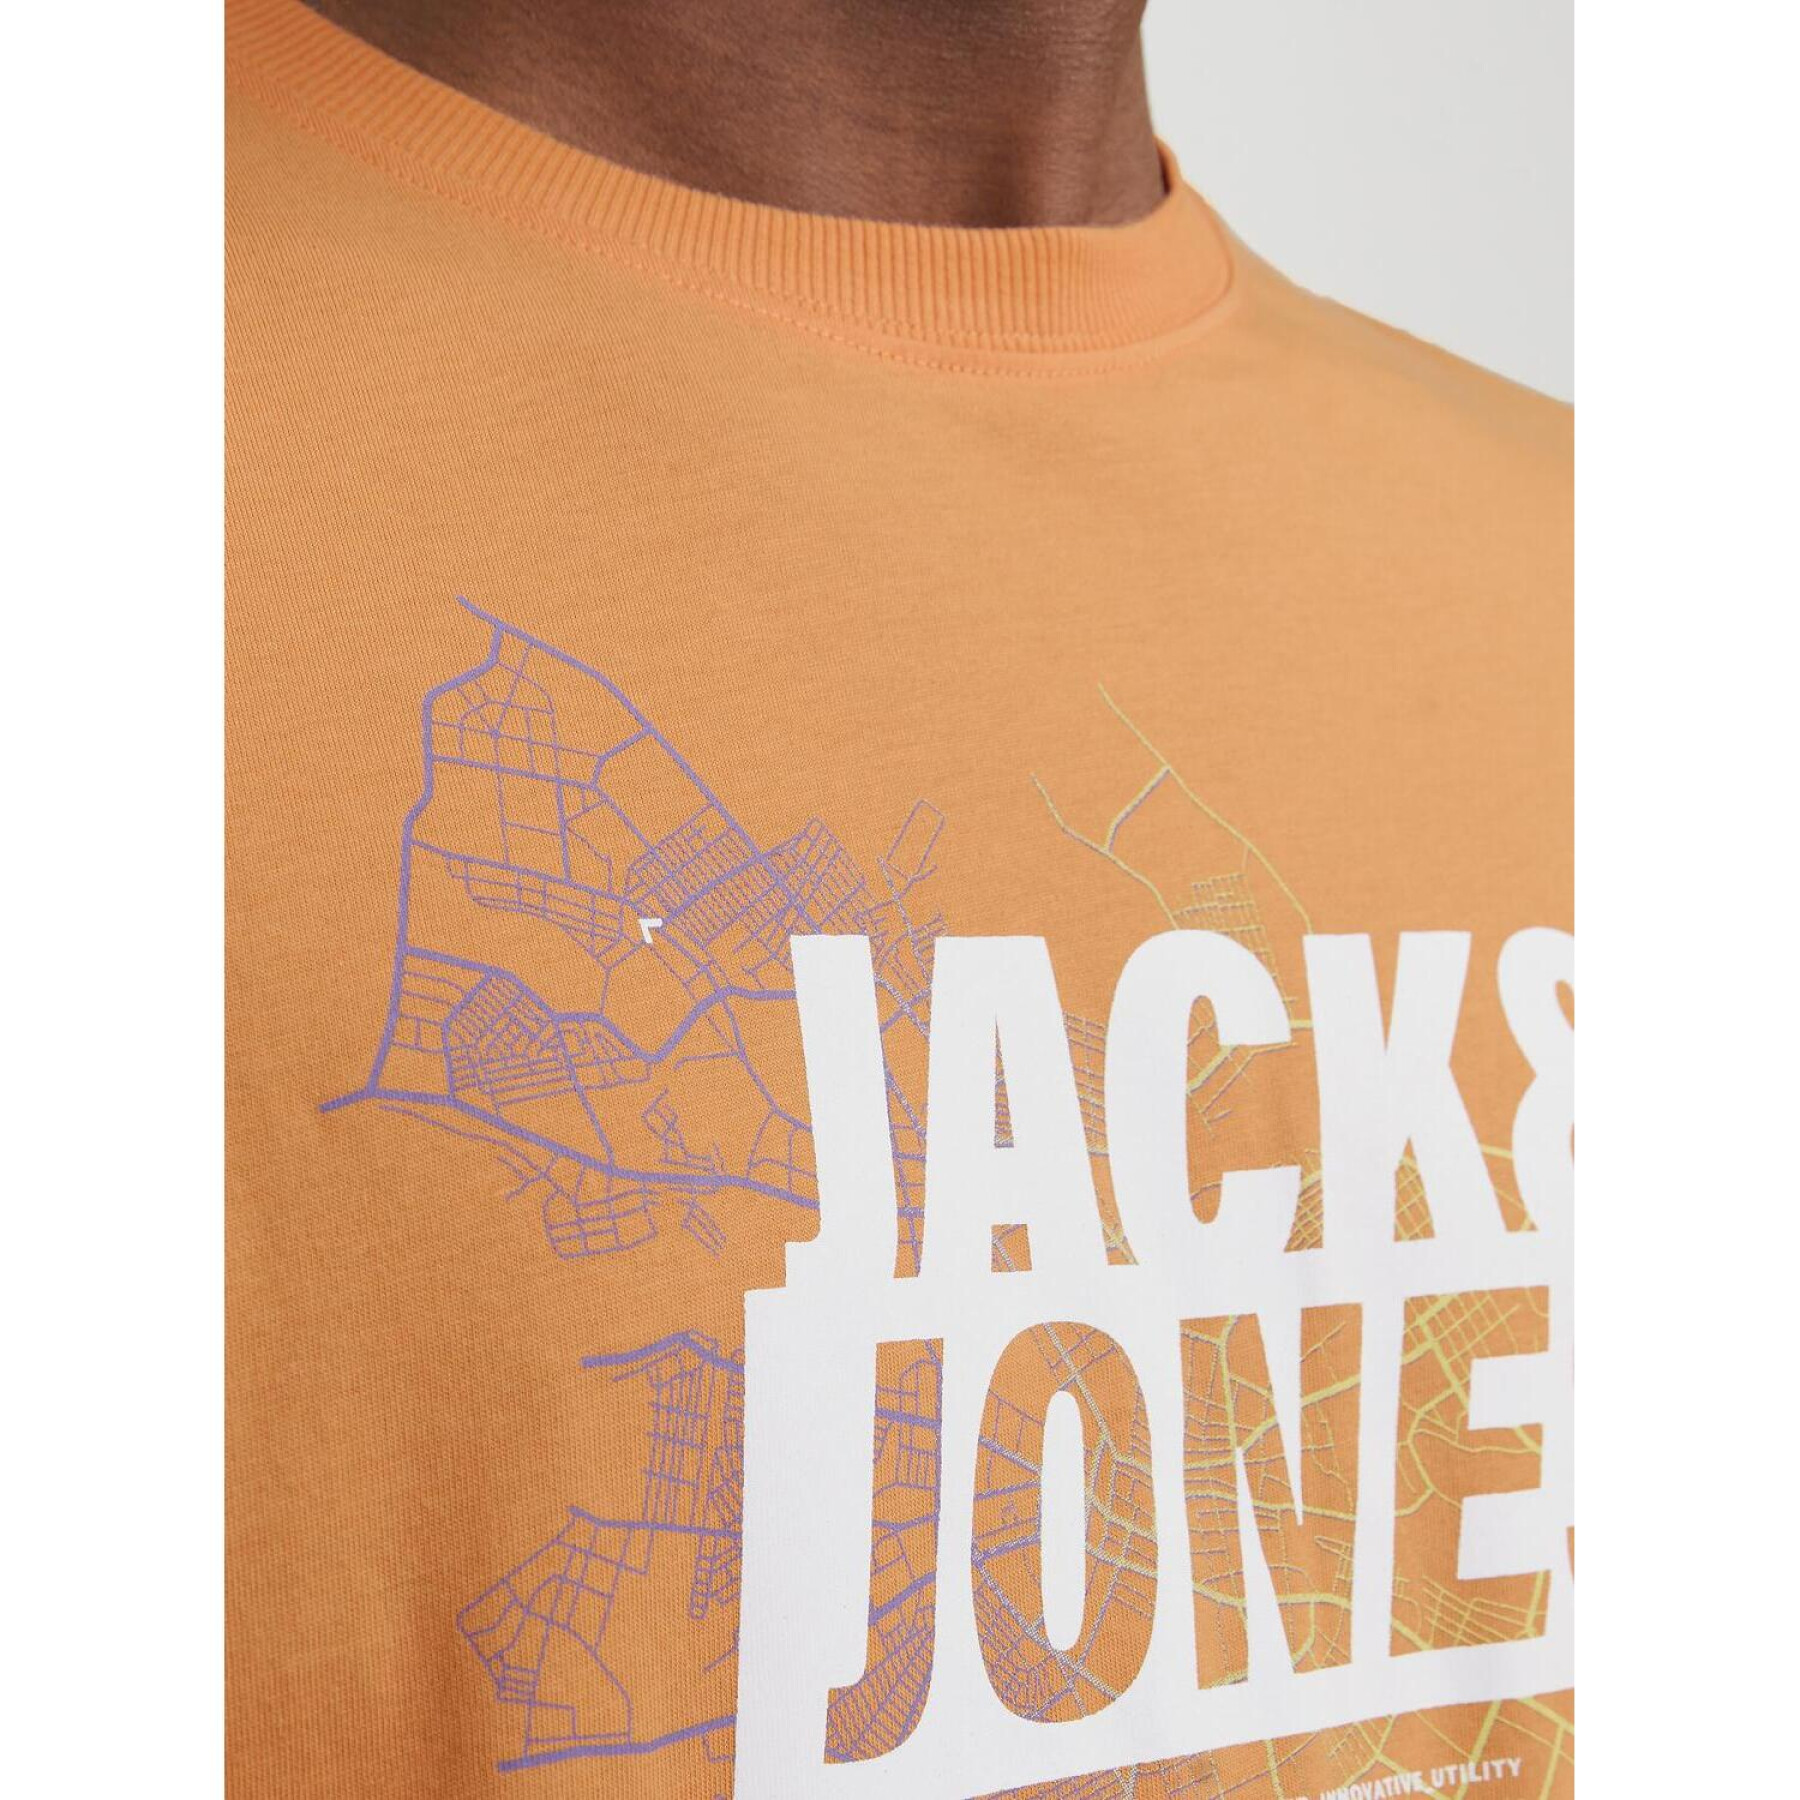 T-shirt Jack & Jones Map Logo